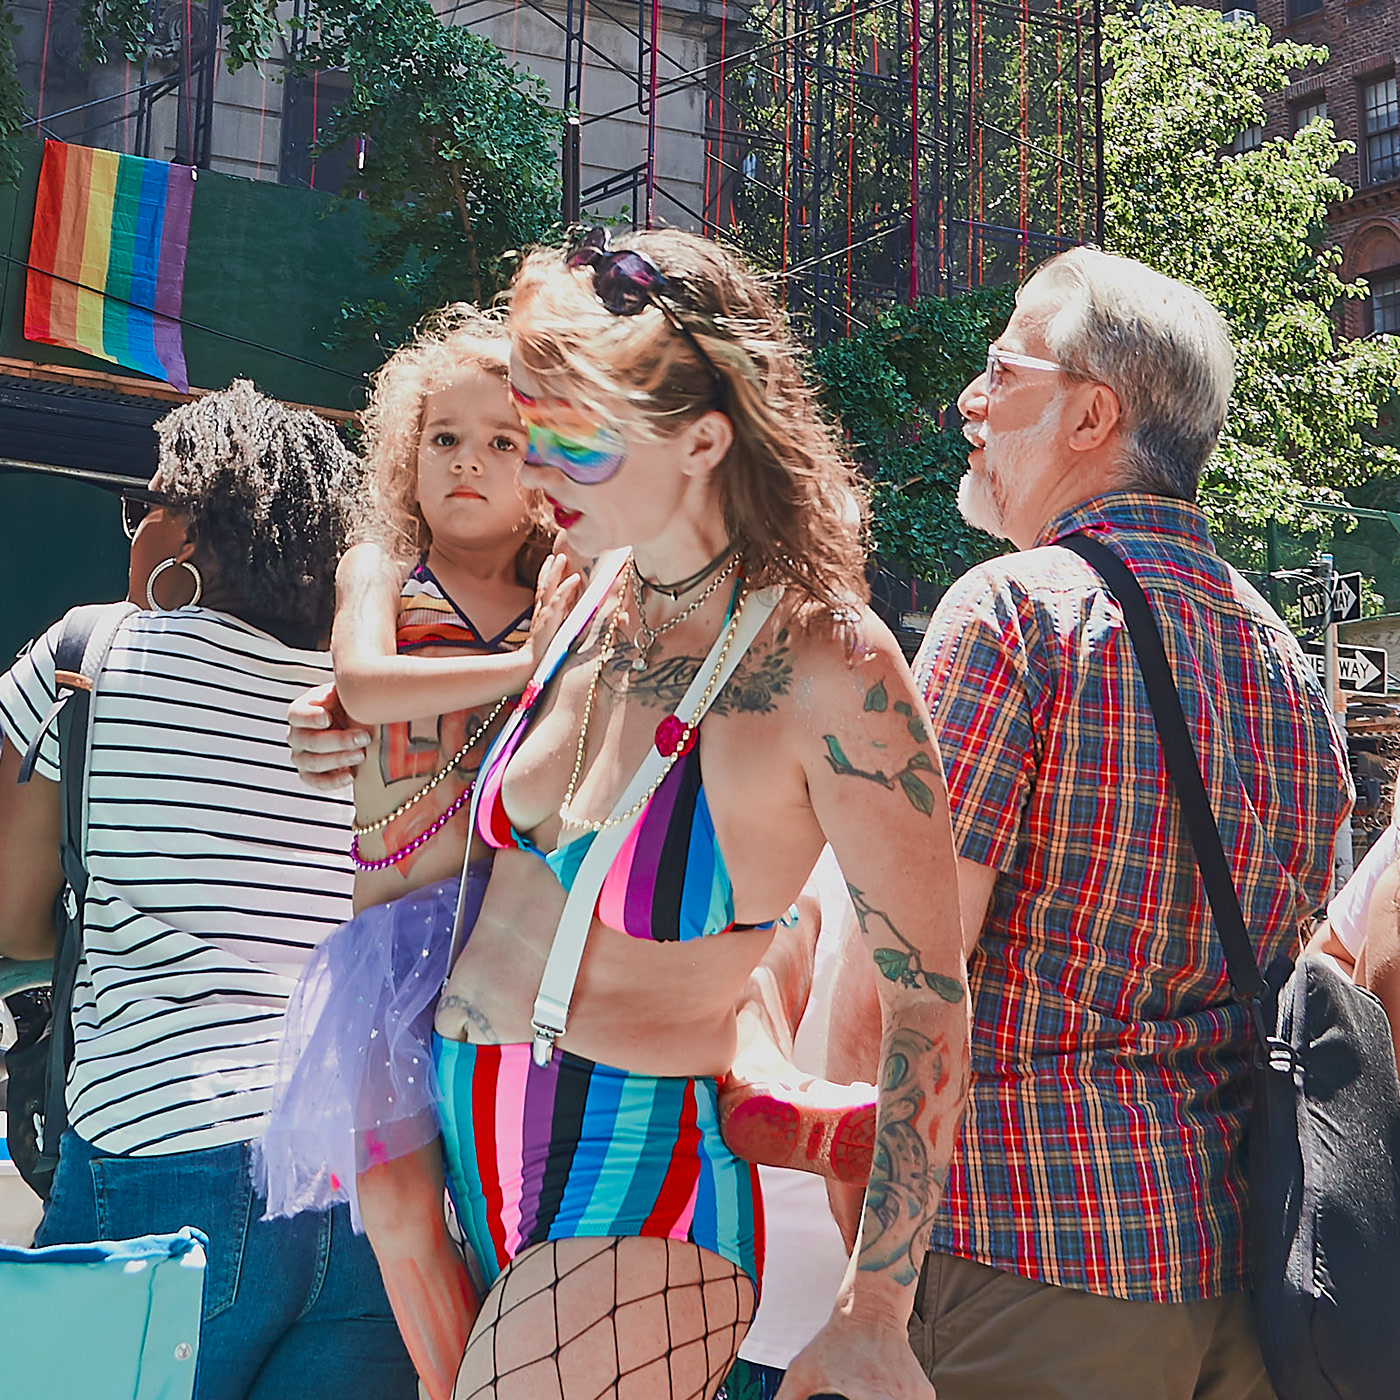 #pride #lgbt #gay #pridemonth #loveislove #lgbtq #love #lesbian #gaypride #queer #instagay #rainbow #bisexual #transgender #trans #lovewins #gayboy #art #dragqueen #equality #pansexual #makeup #like #bi #follow #lgbtpride #fashion #drag #photography #bhfyp